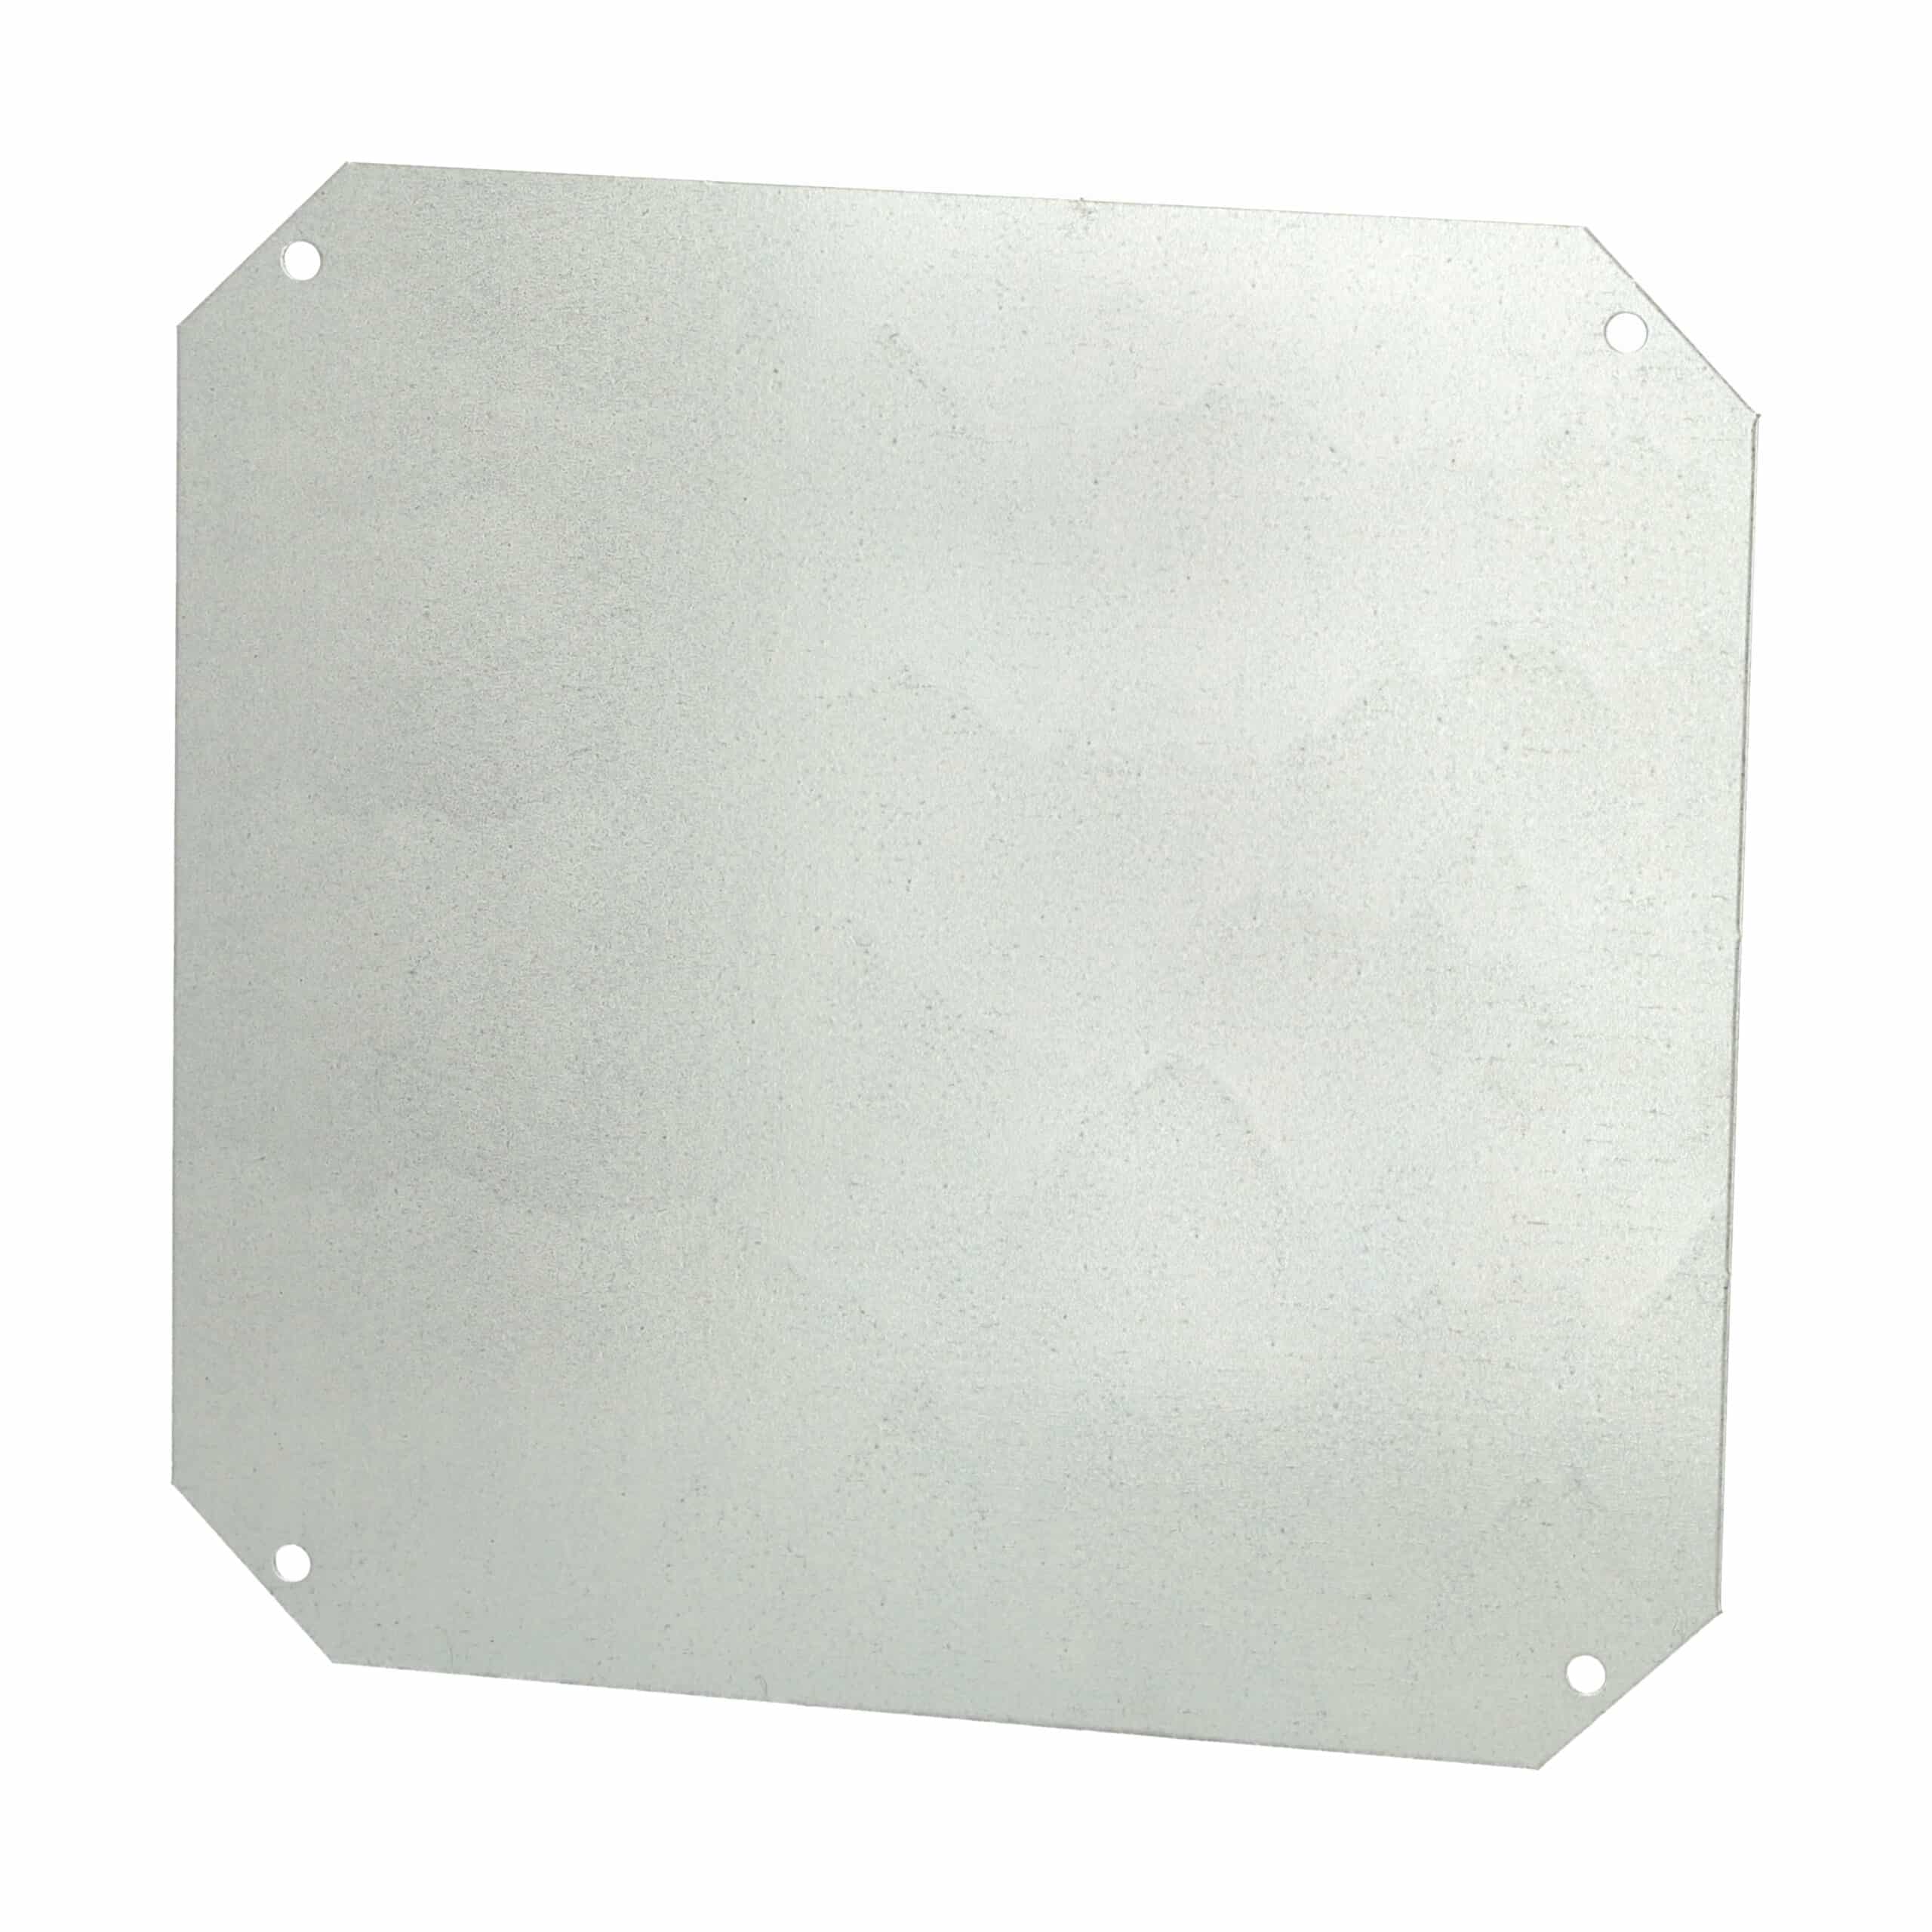 Fibox NEO metal mounting plate 32mm x 32mm (4850061)